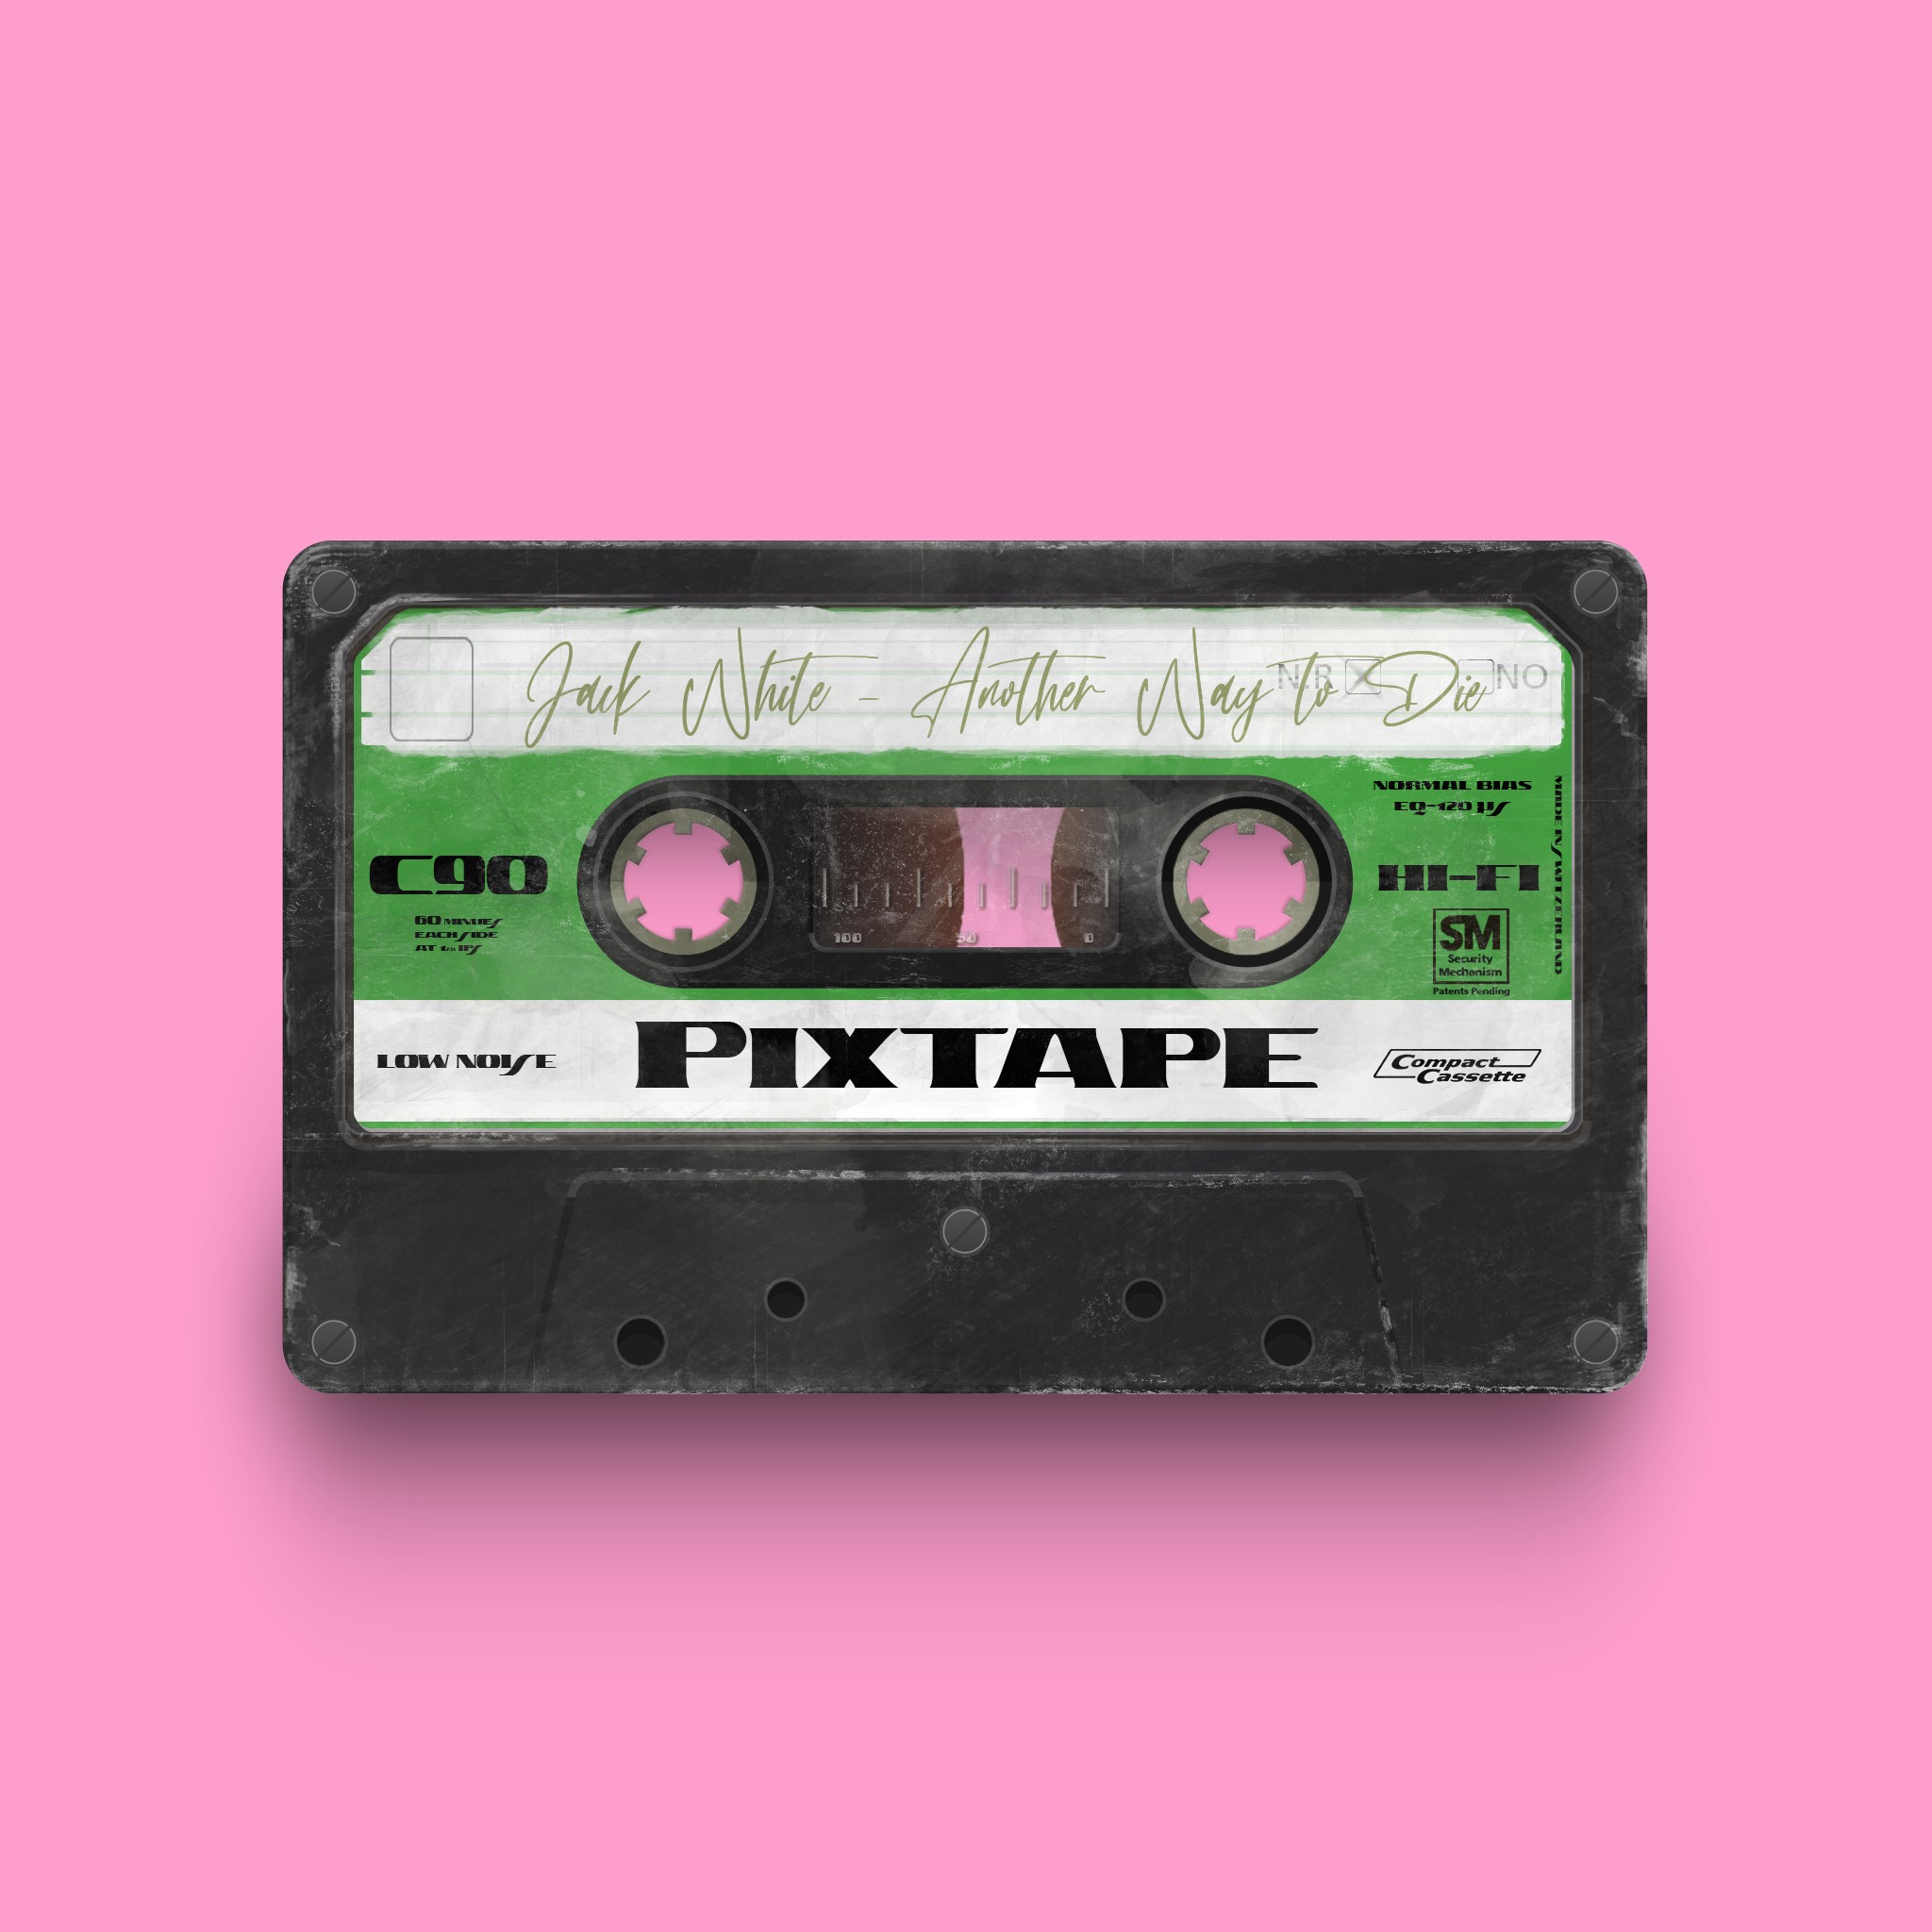 PixTape #34 | Jack White - Another Way to Die